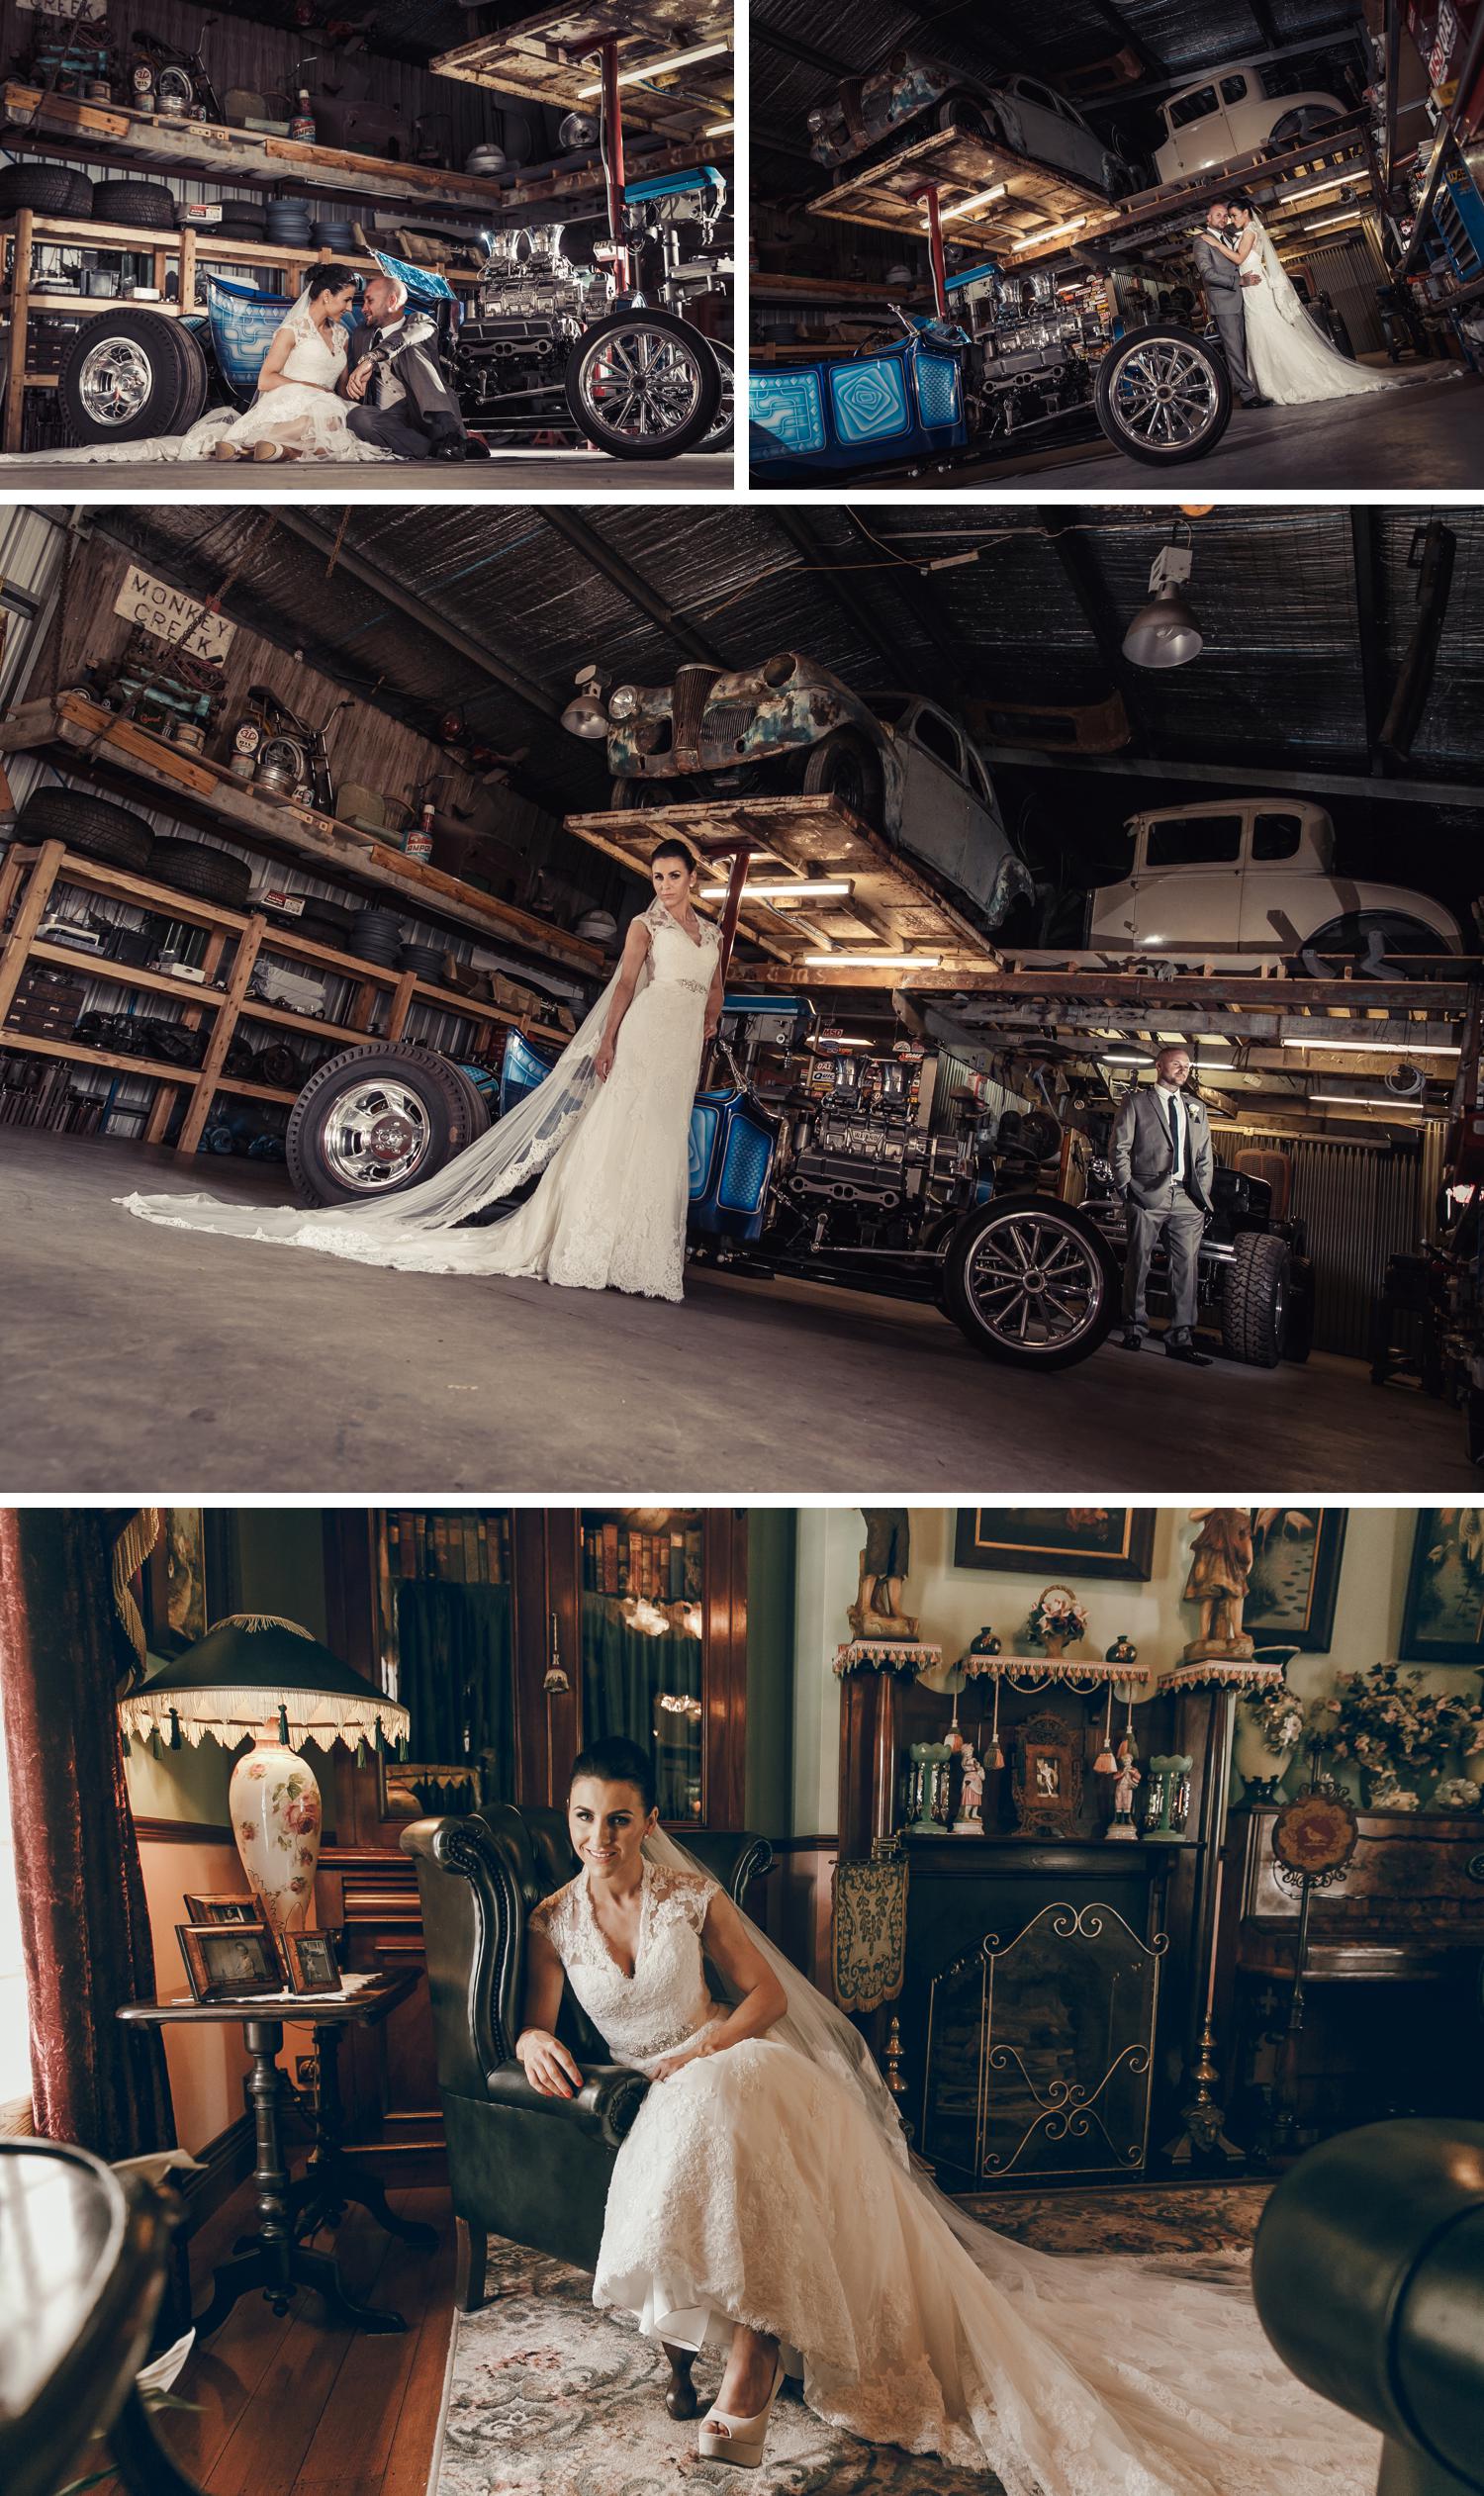 Rural Gippsland Wedding Photos, Intimate Property Wedding Photos Bride and Groom Embracing by Danae Studios